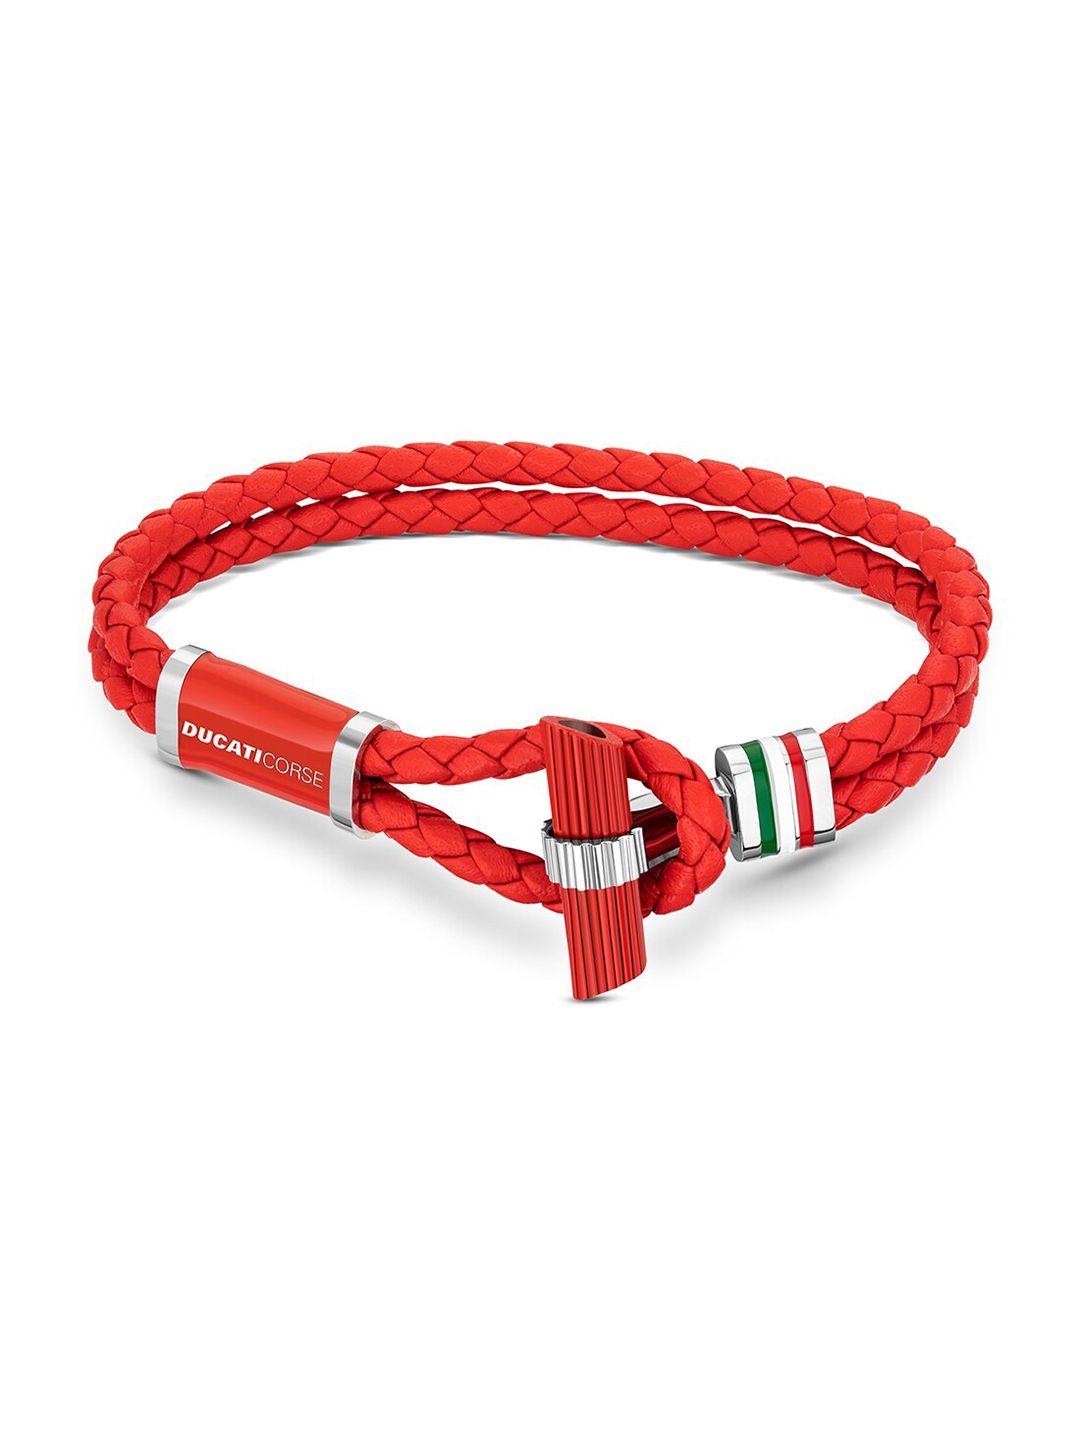 ducati corse men silver-toned & red leather wraparound bracelet